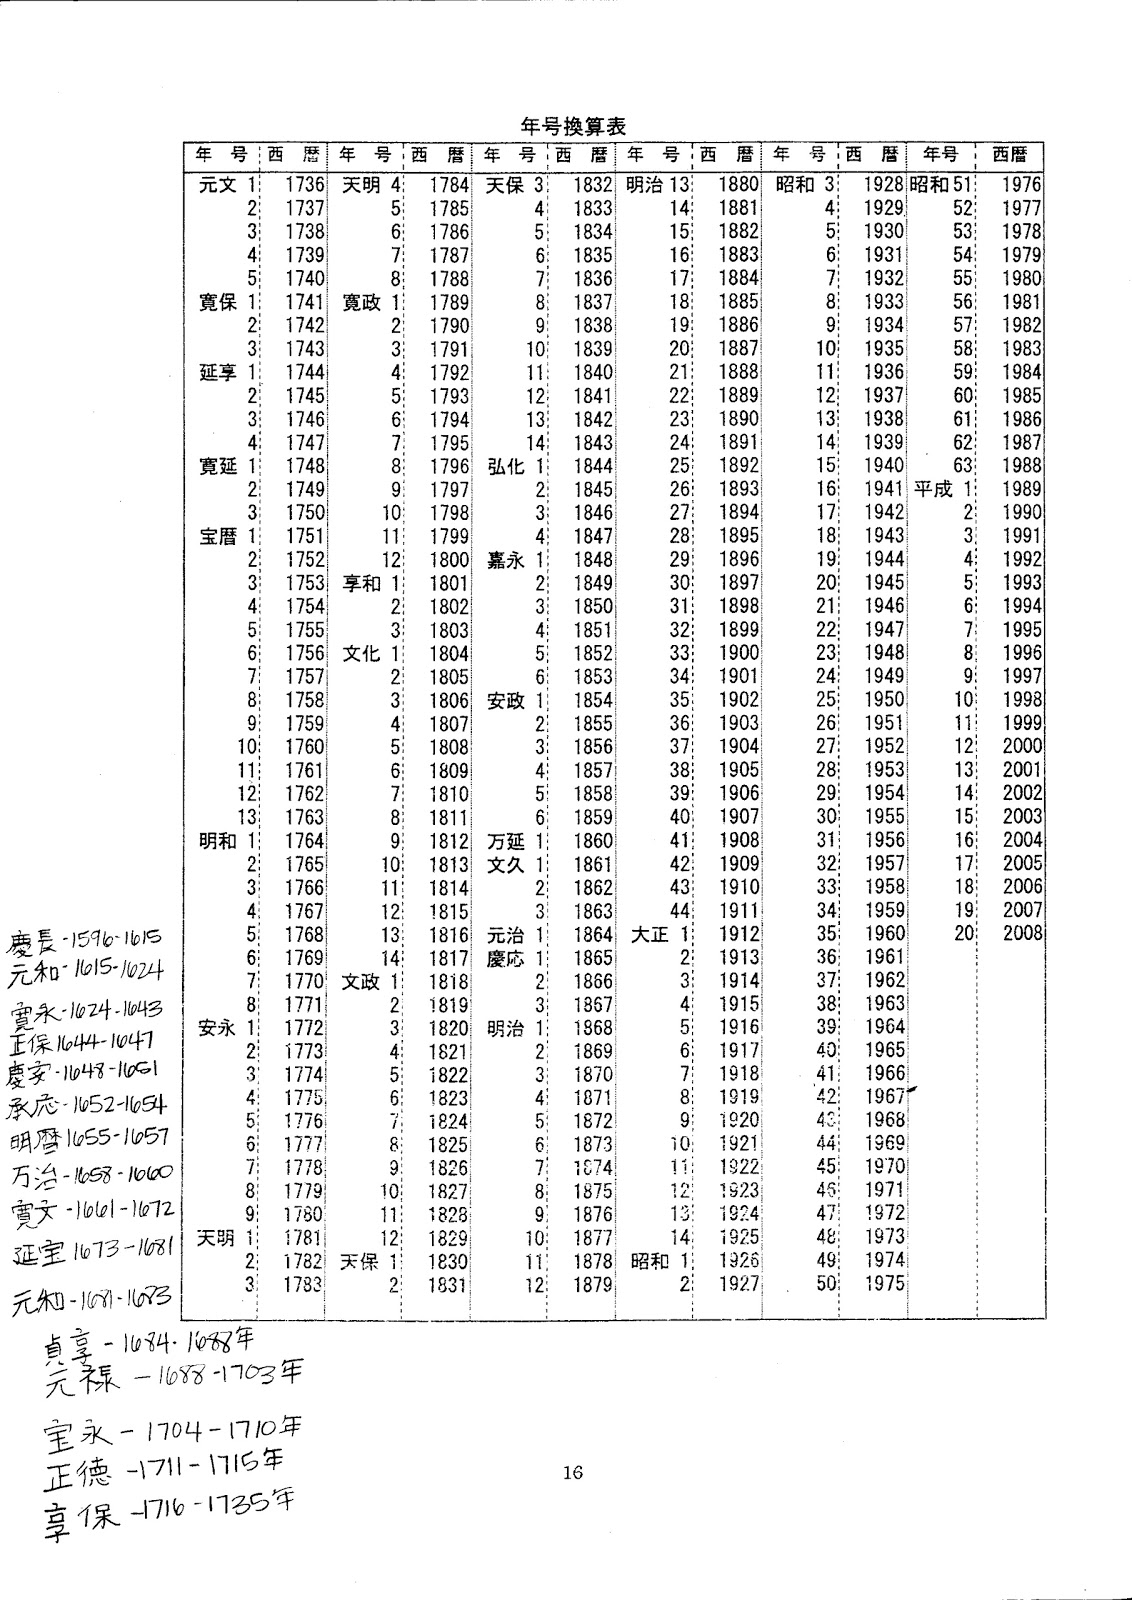 Japanese Year Conversion Chart